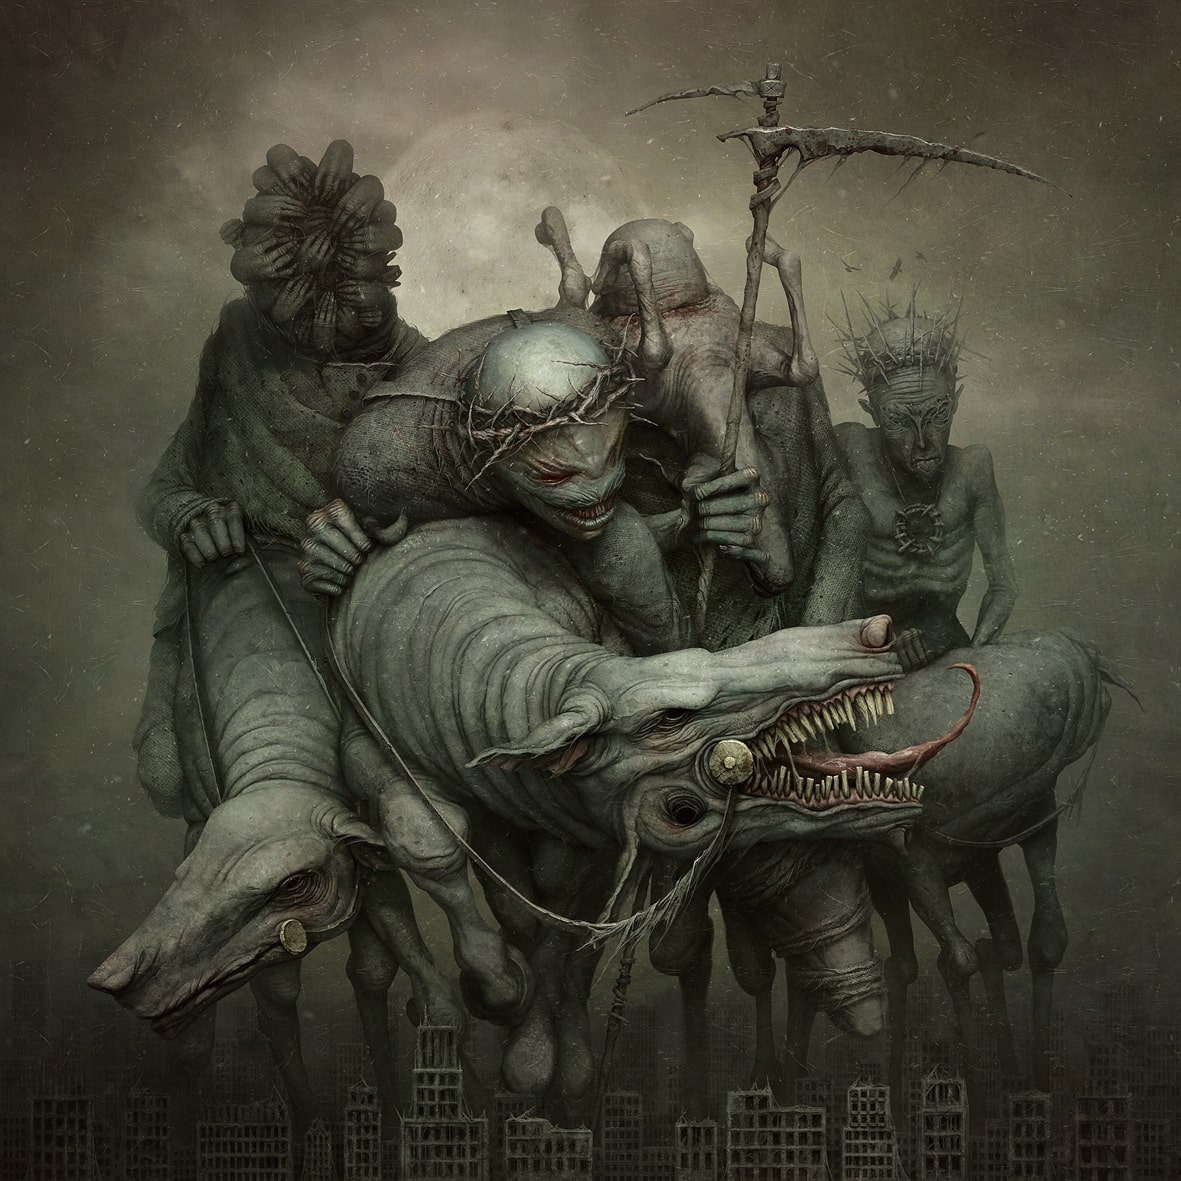 Horseman of the Apocalypse by Gloom82 on DeviantArt